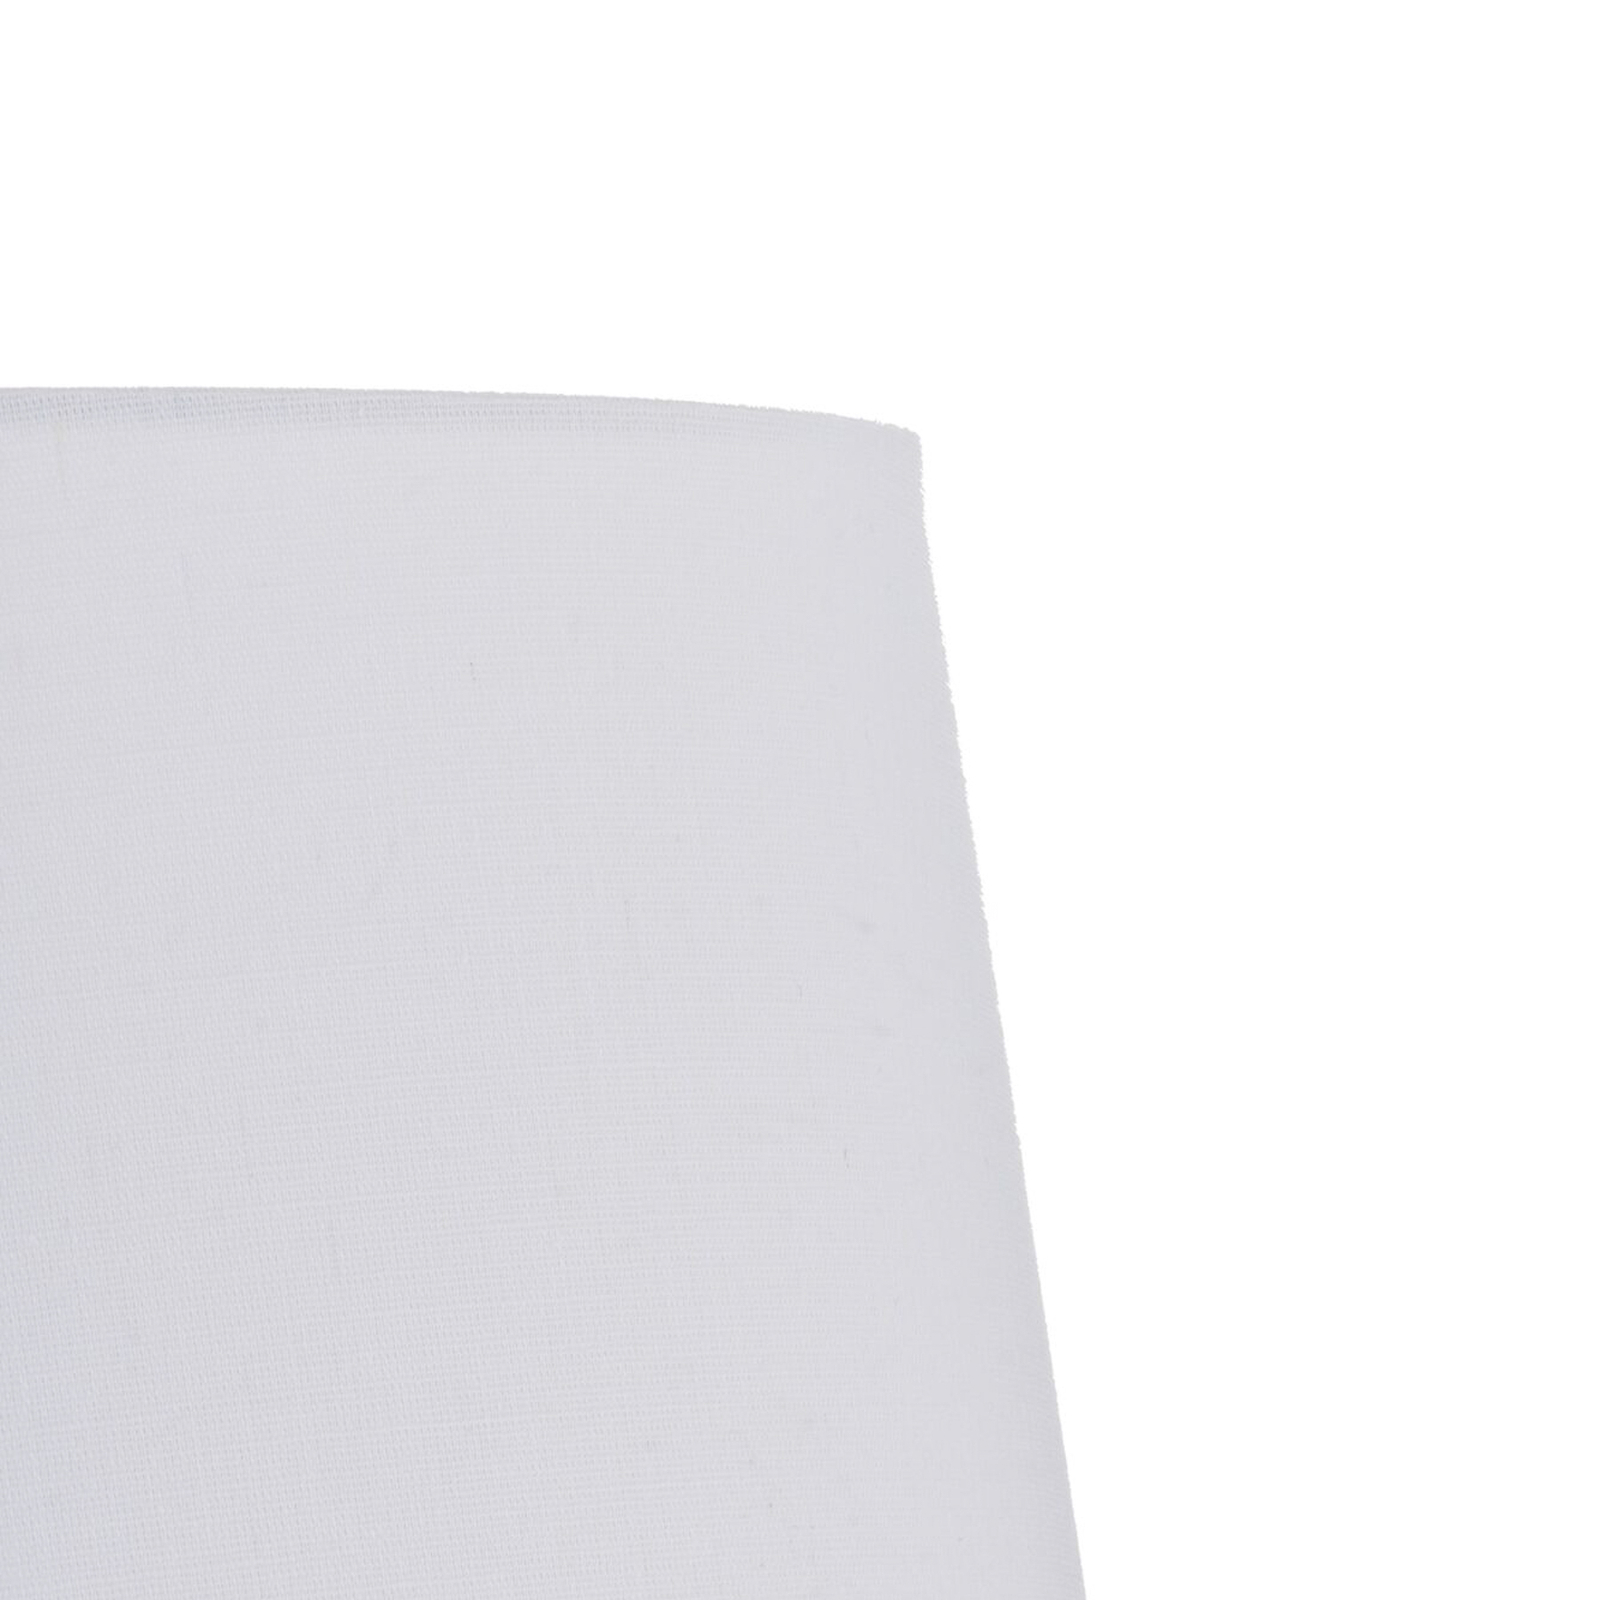 Pauleen Glowing Hug stolní lampa, bílá/šedomodrá